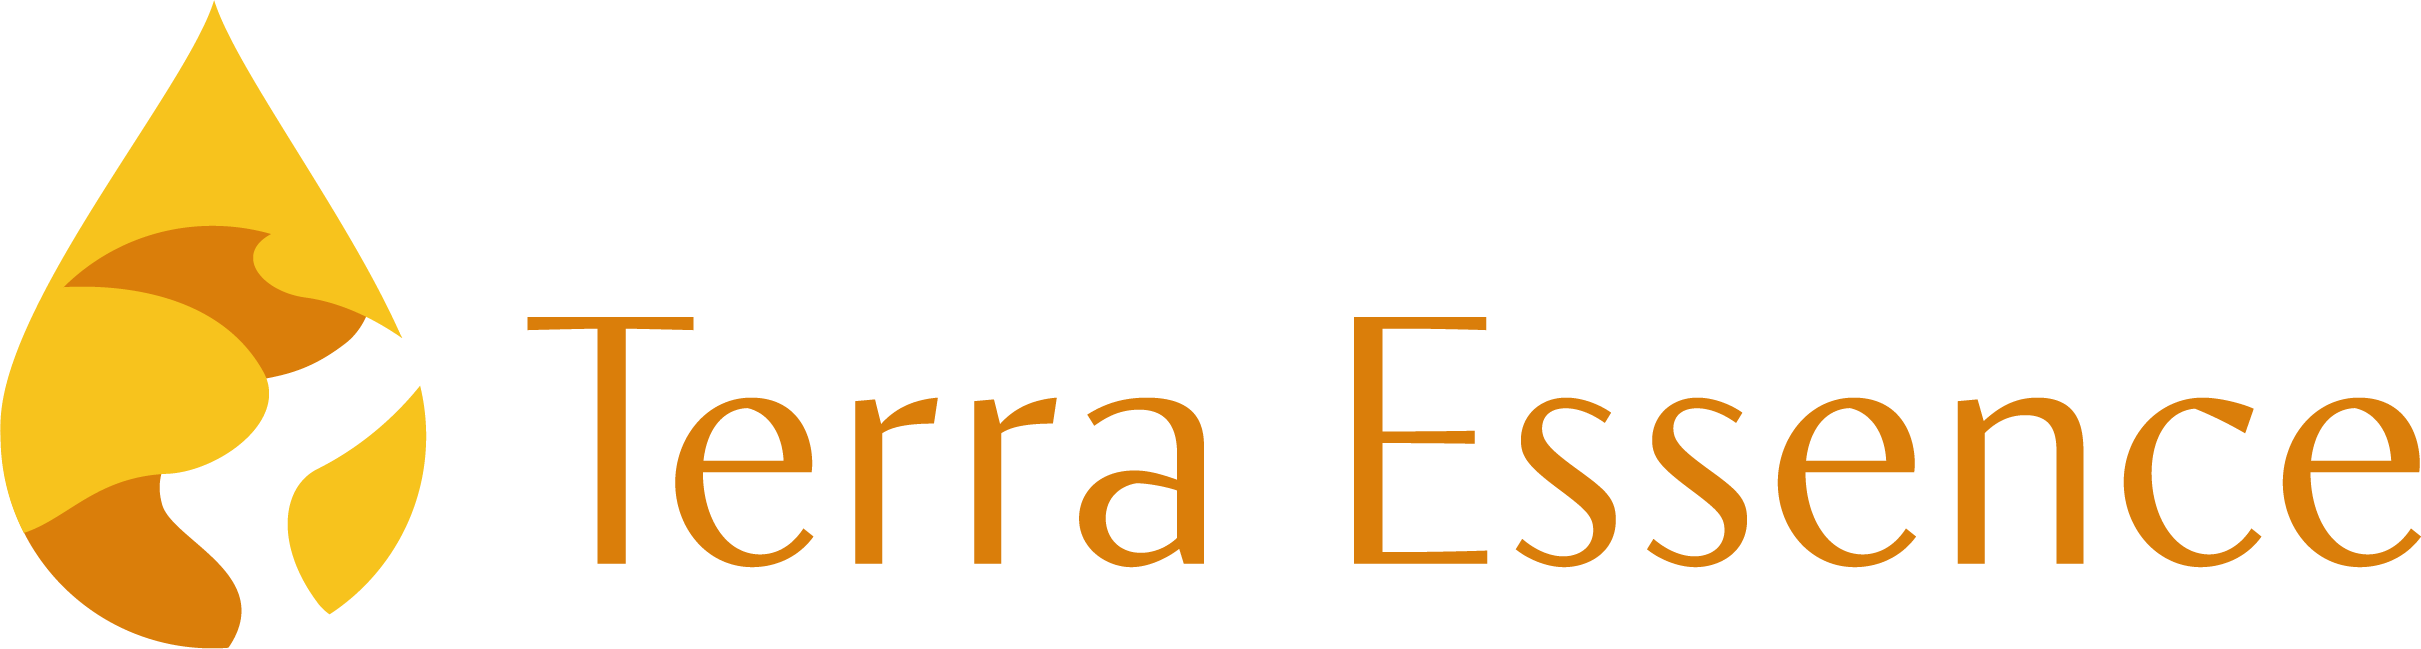 Terra Essence Logo